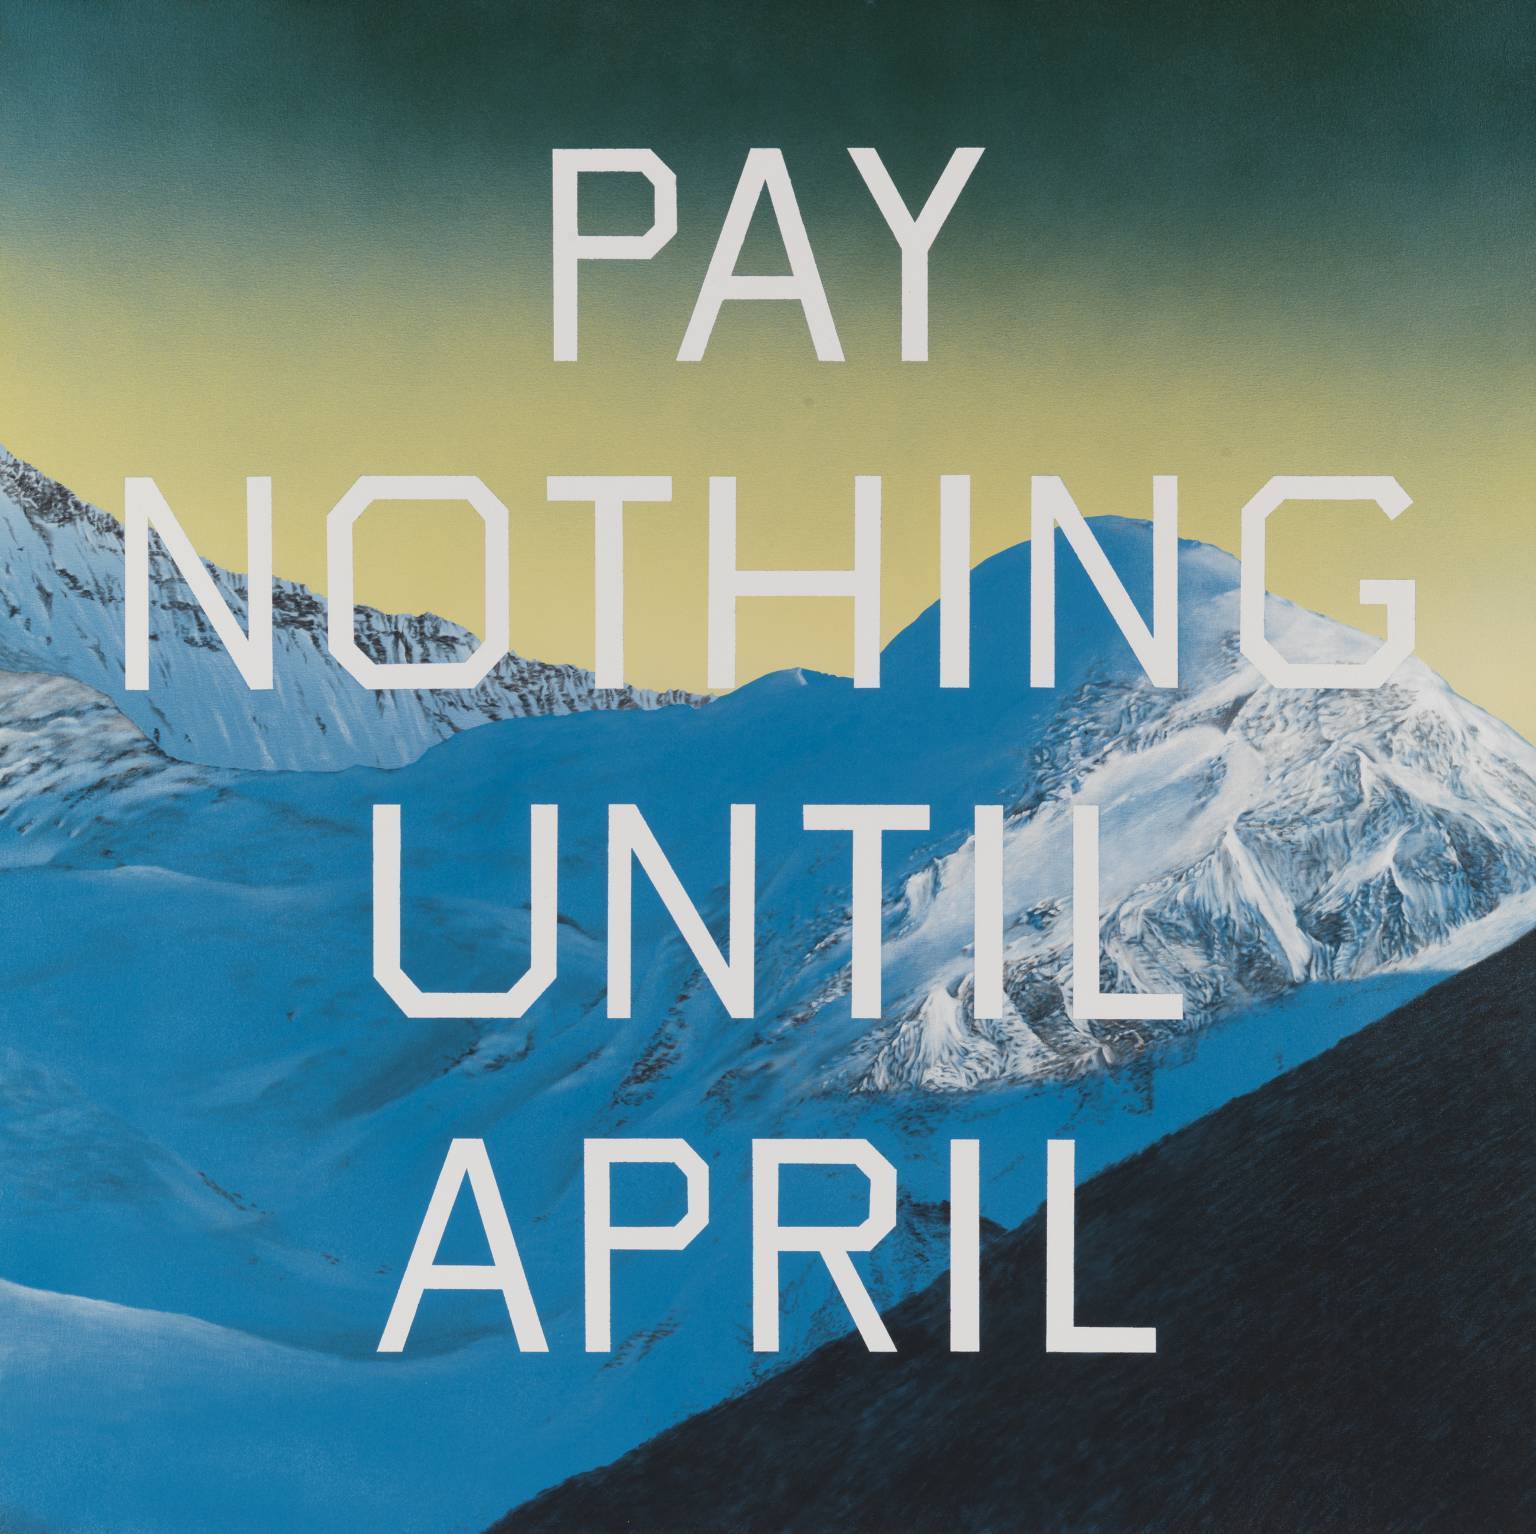 Эд Рушей. Pay Nothing Until April. 2007. Холст, акрил. 1,5 x 1,5 м. Галерея Тейт, Лондон